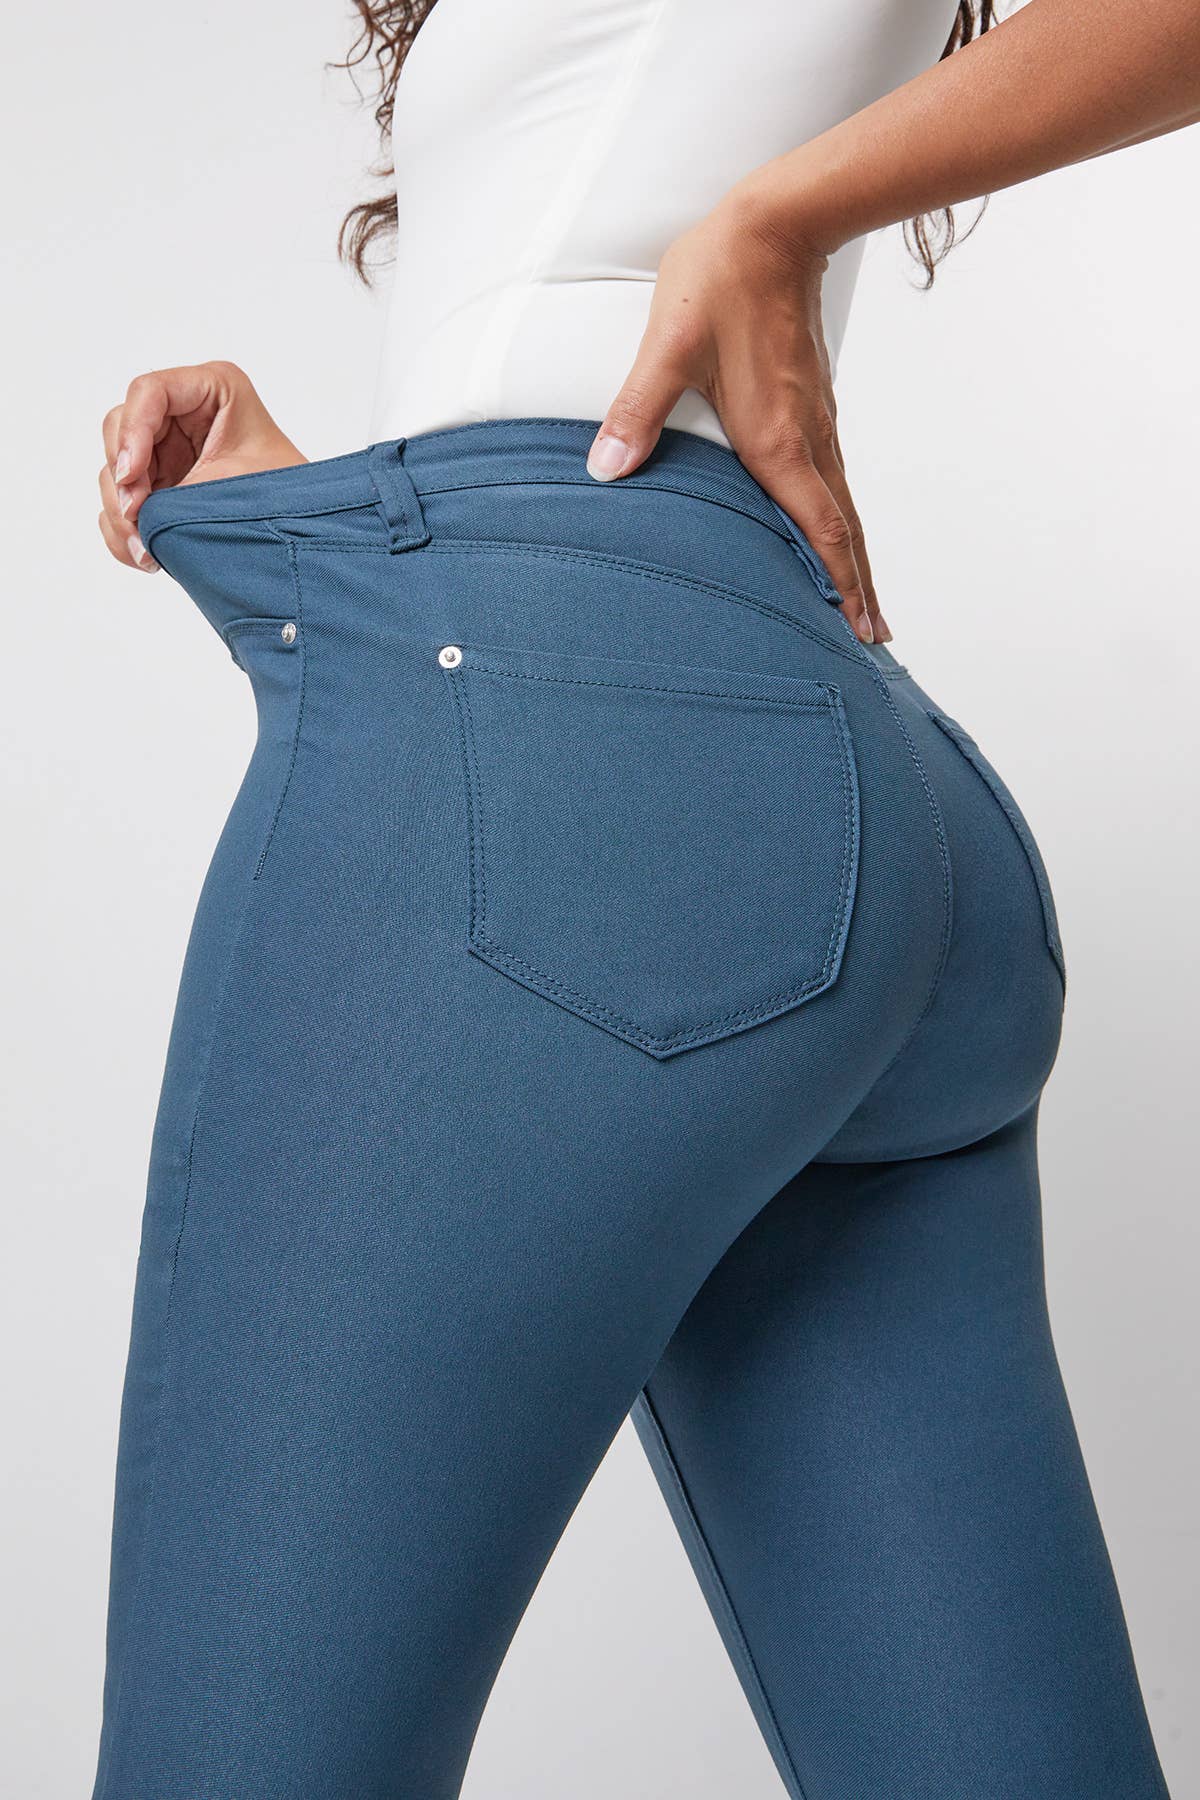 Junior Hyperstretch Mid-Rise Skinny Jean: Medium / BLSTL-Blue STeel